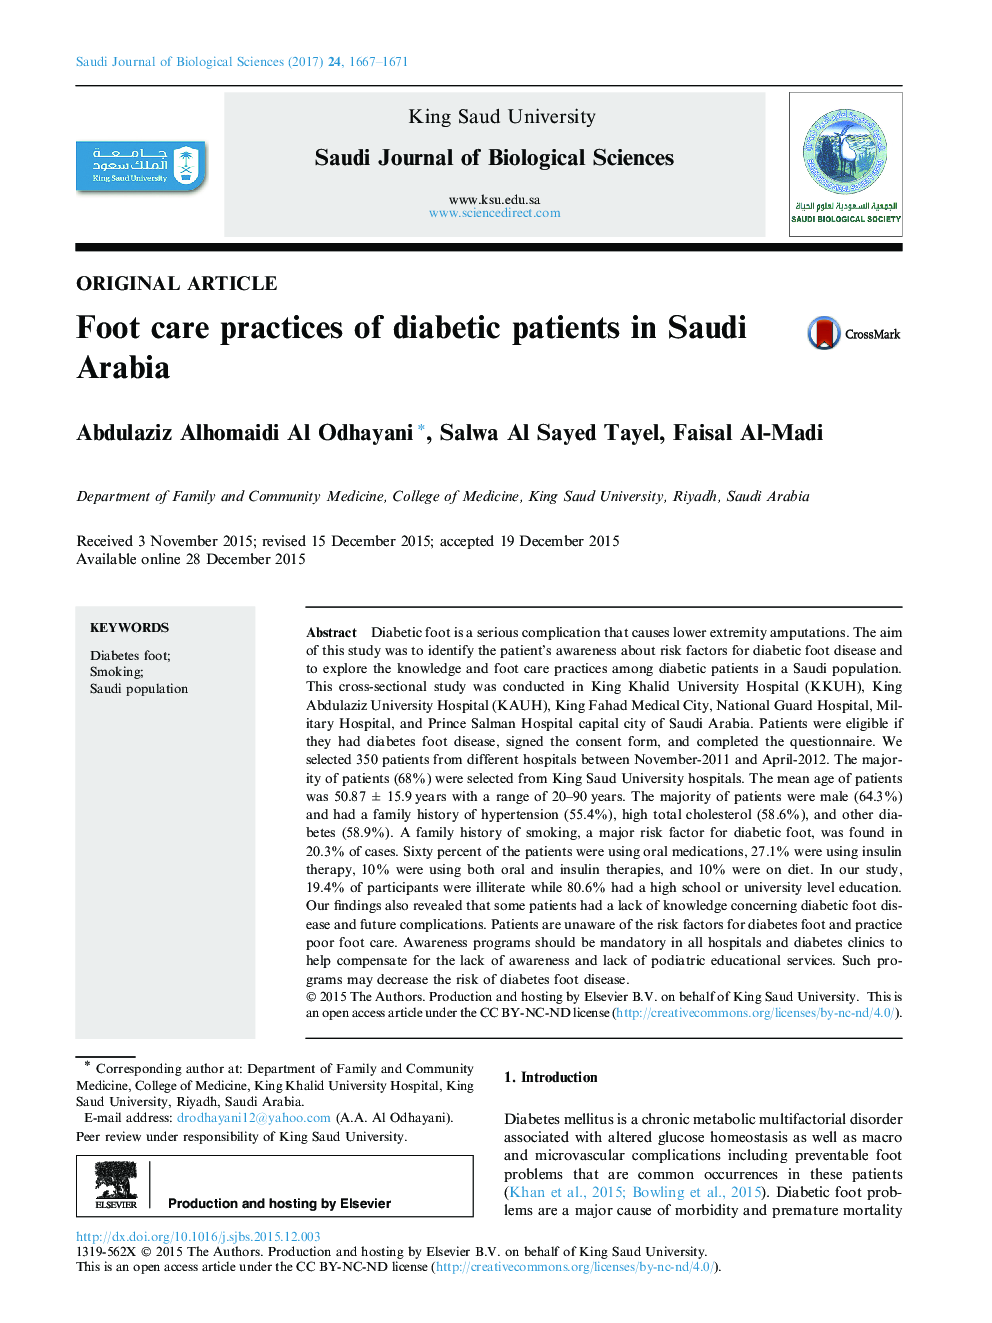 Original articleFoot care practices of diabetic patients in Saudi Arabia